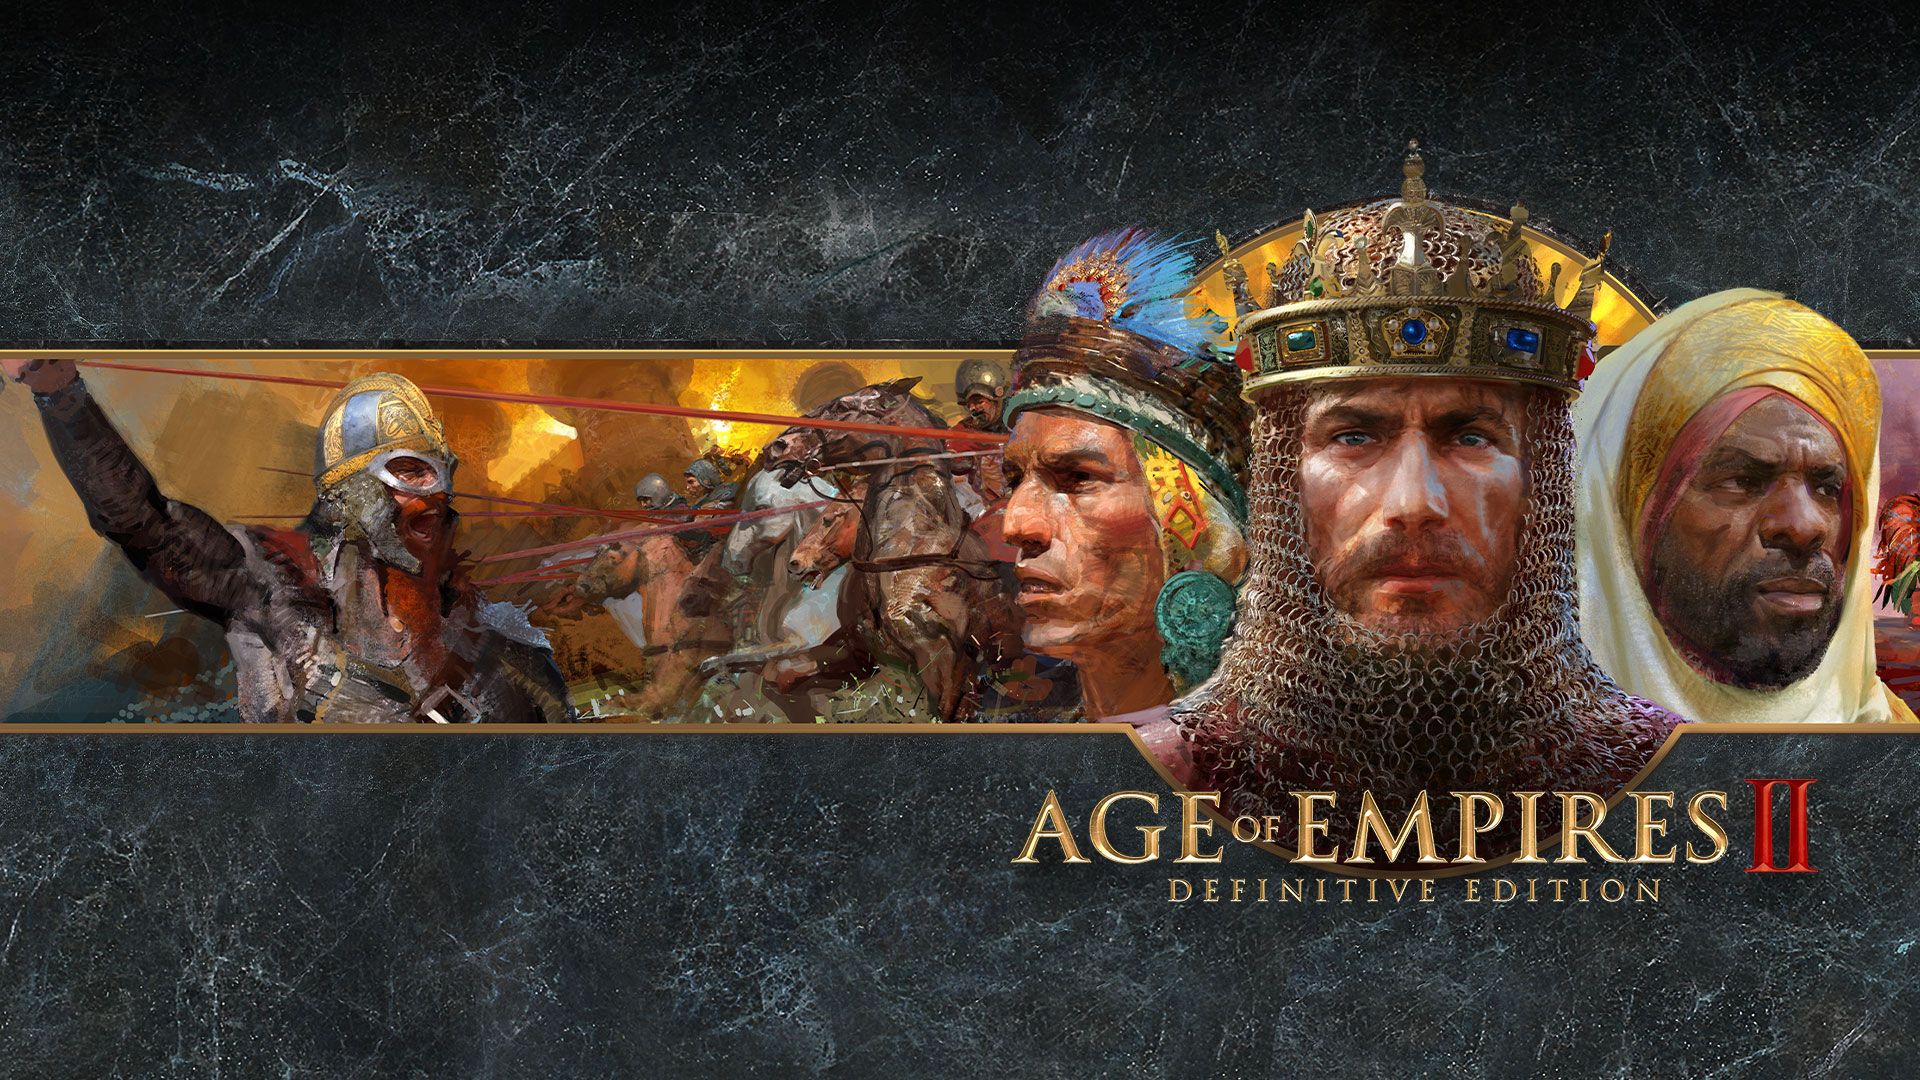 Age of Empires II Definitive Edition 標誌與交戰派系的藝術繪圖